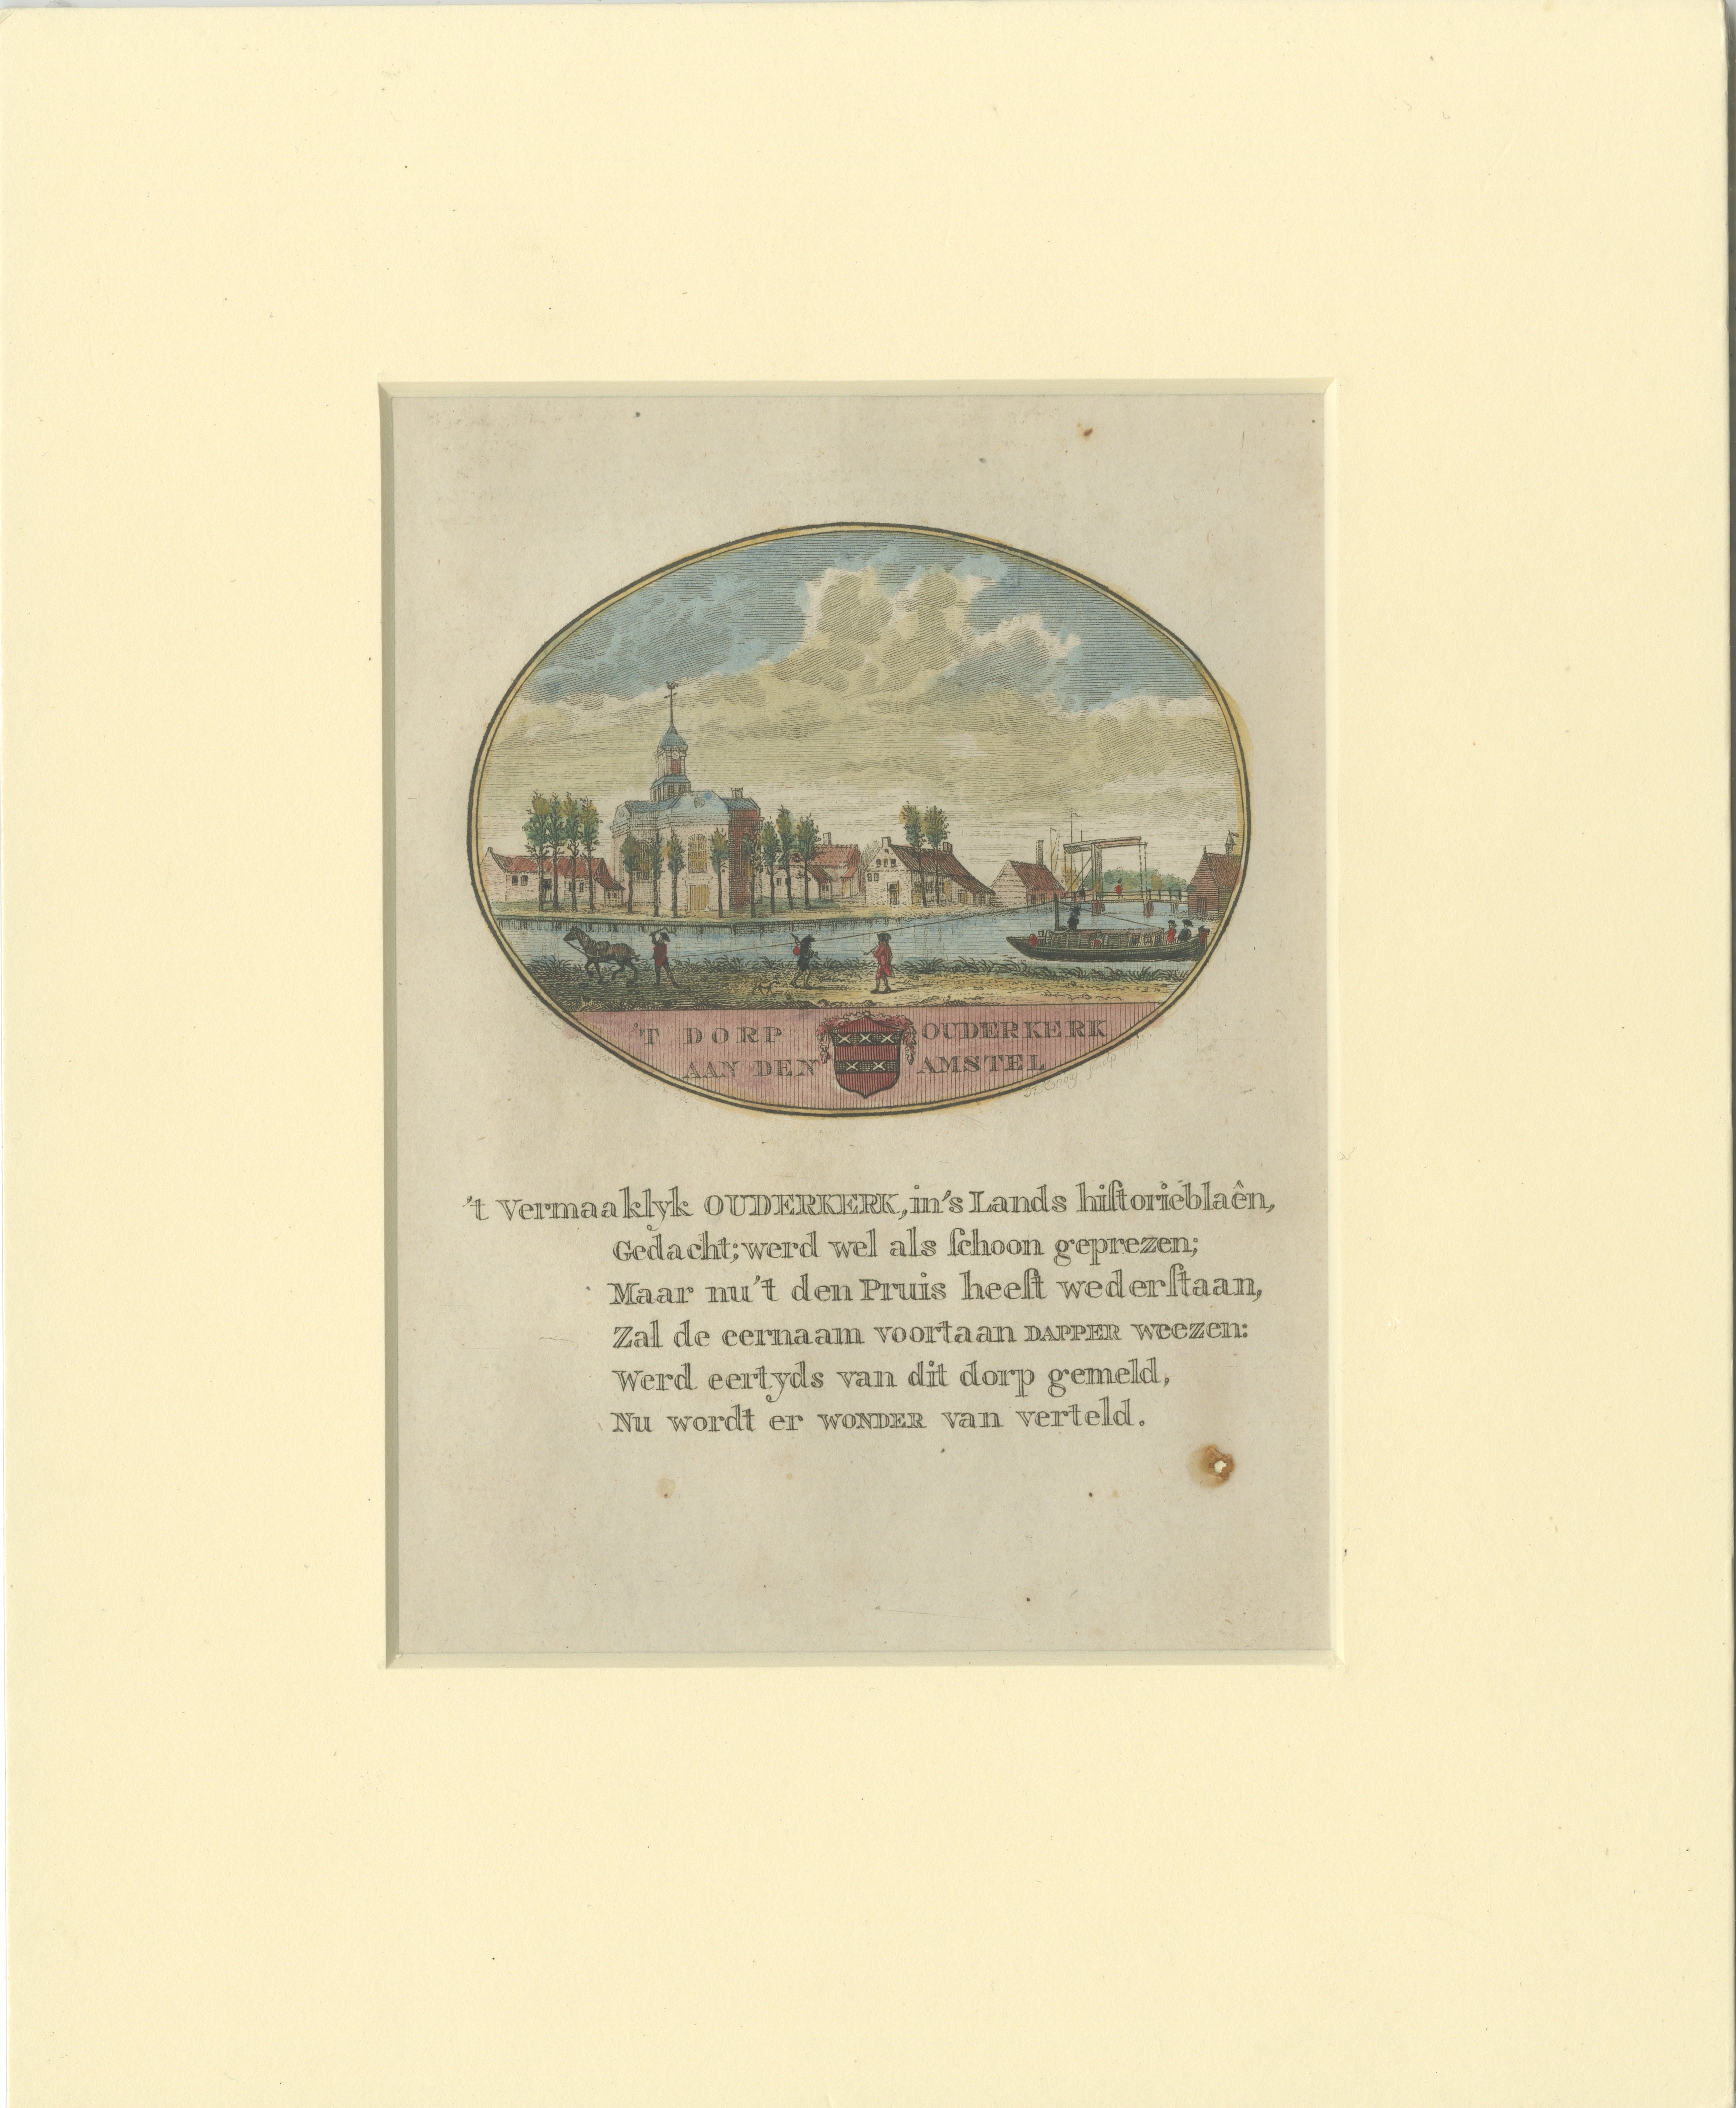 Antiker Druck der Stadt Ouderkerk aan de Amstel, Holland, 1795